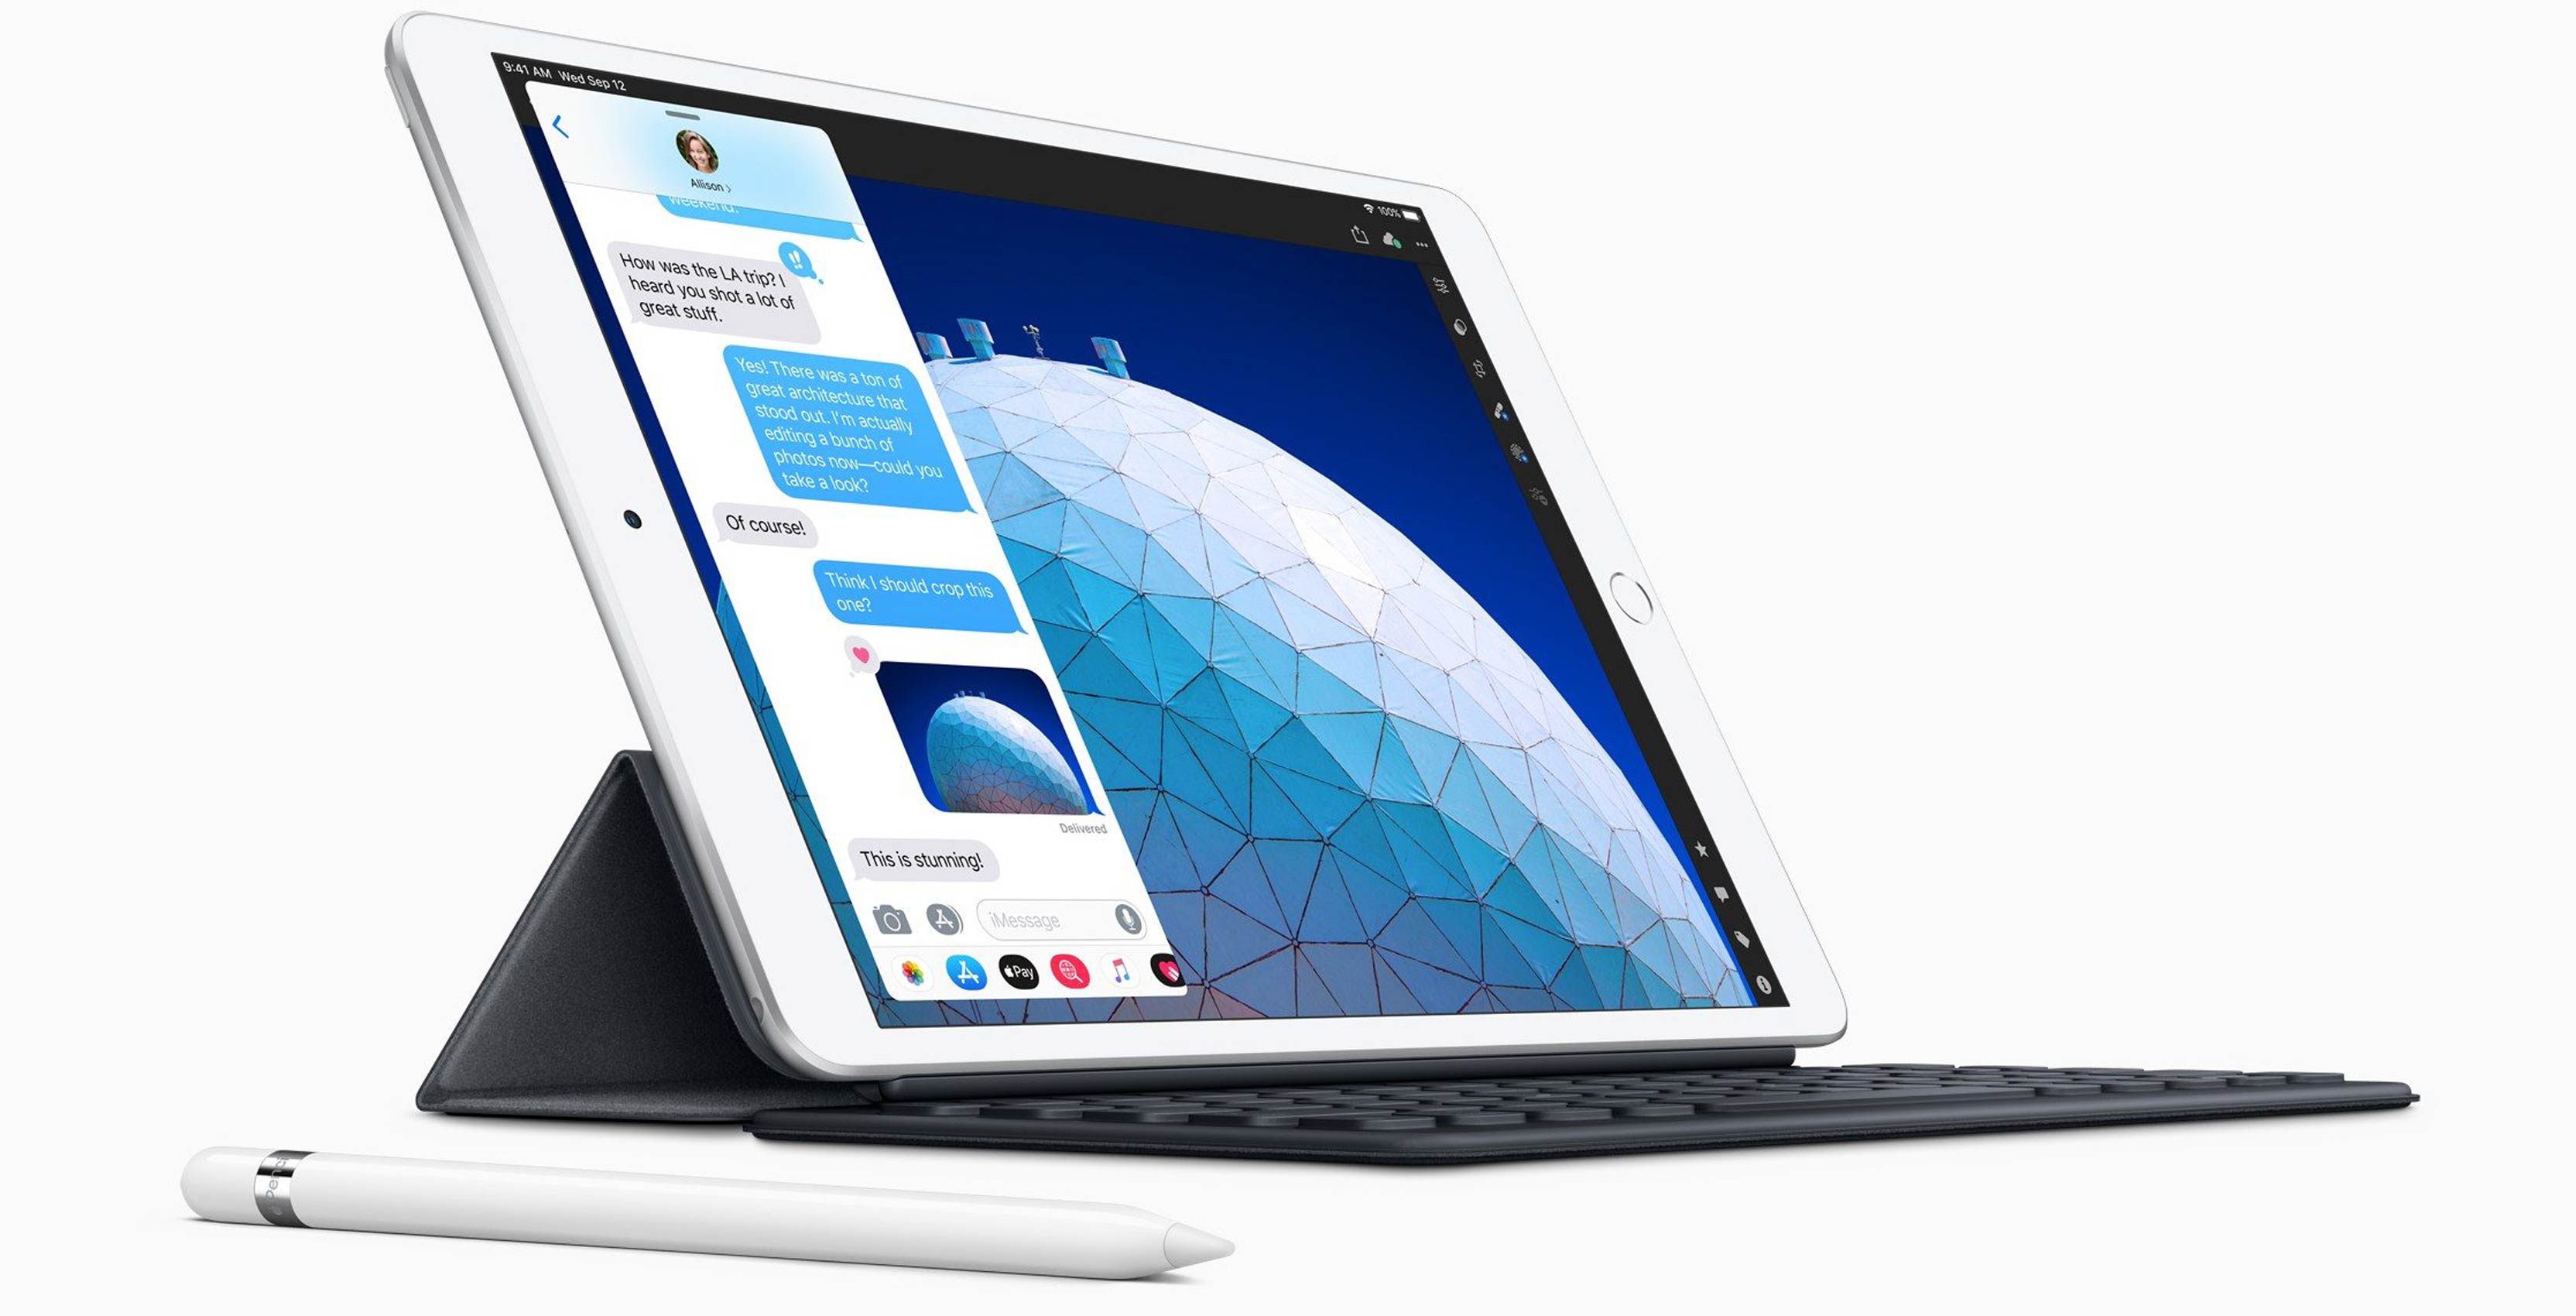 Apple's new 10.5-inch iPad Air